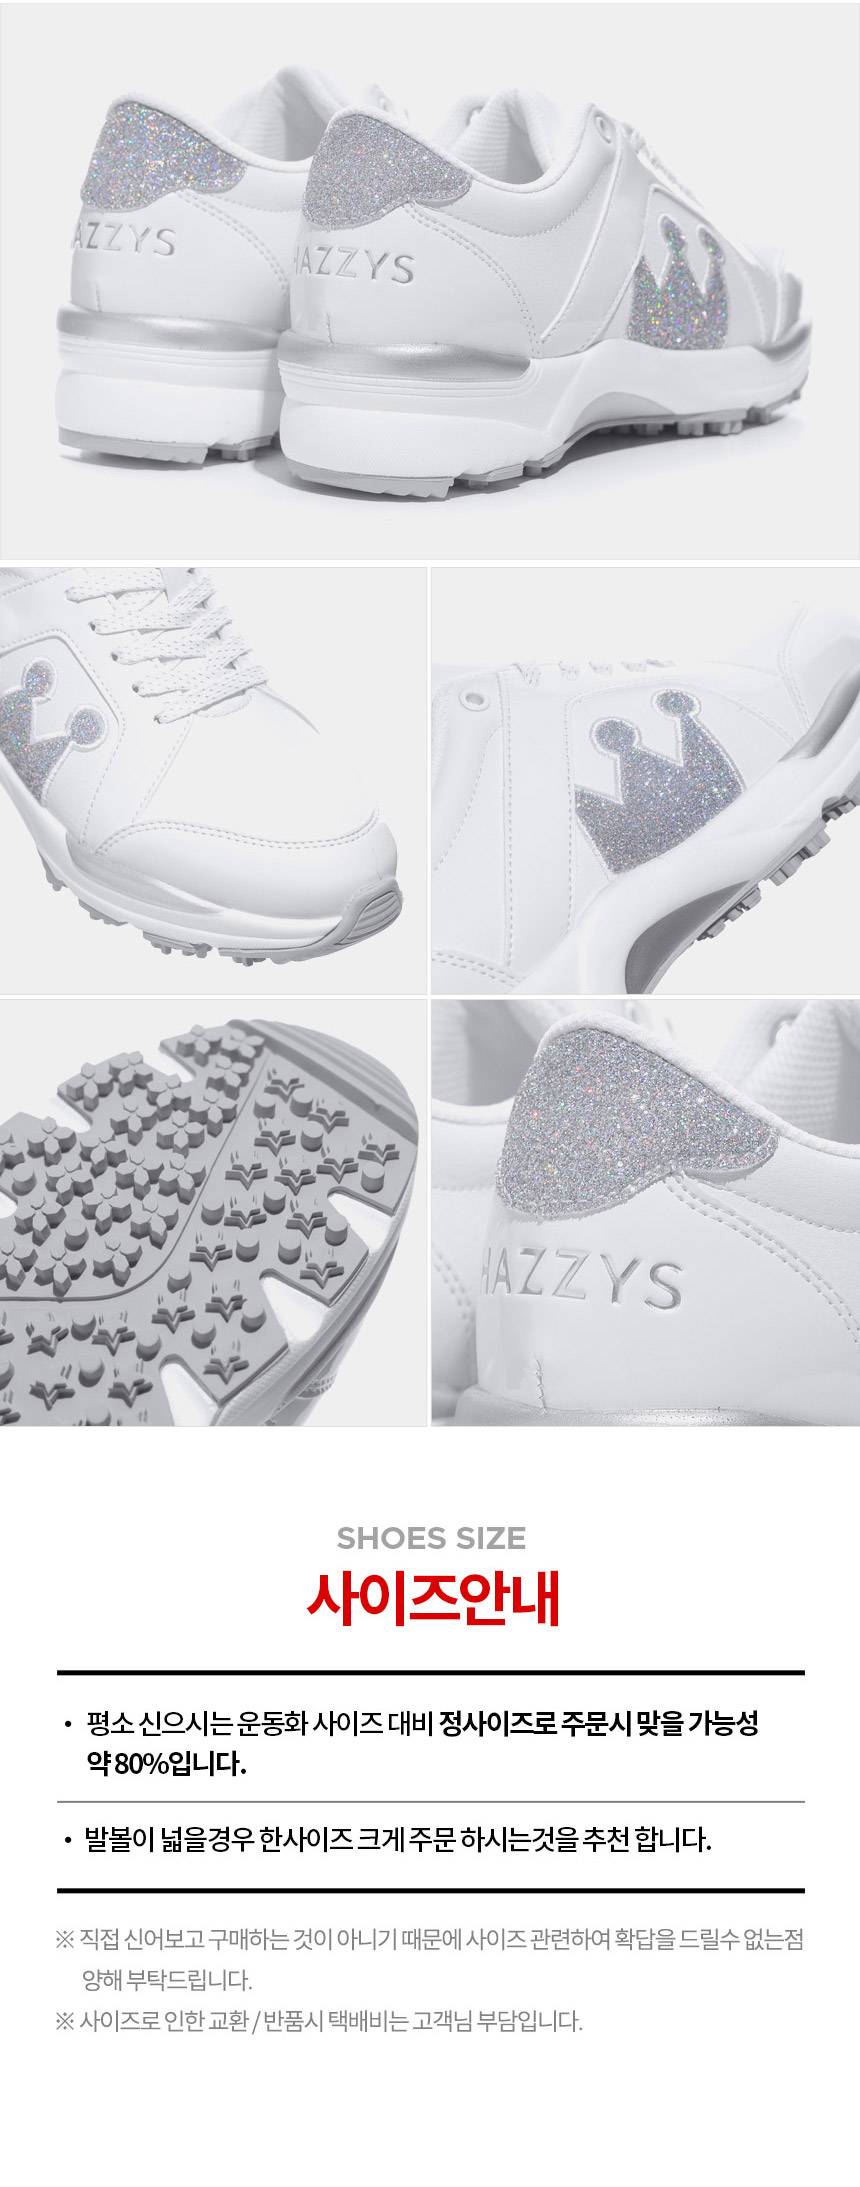 hazzys_crown_spikrless_golf_shoes_22_11.jpg